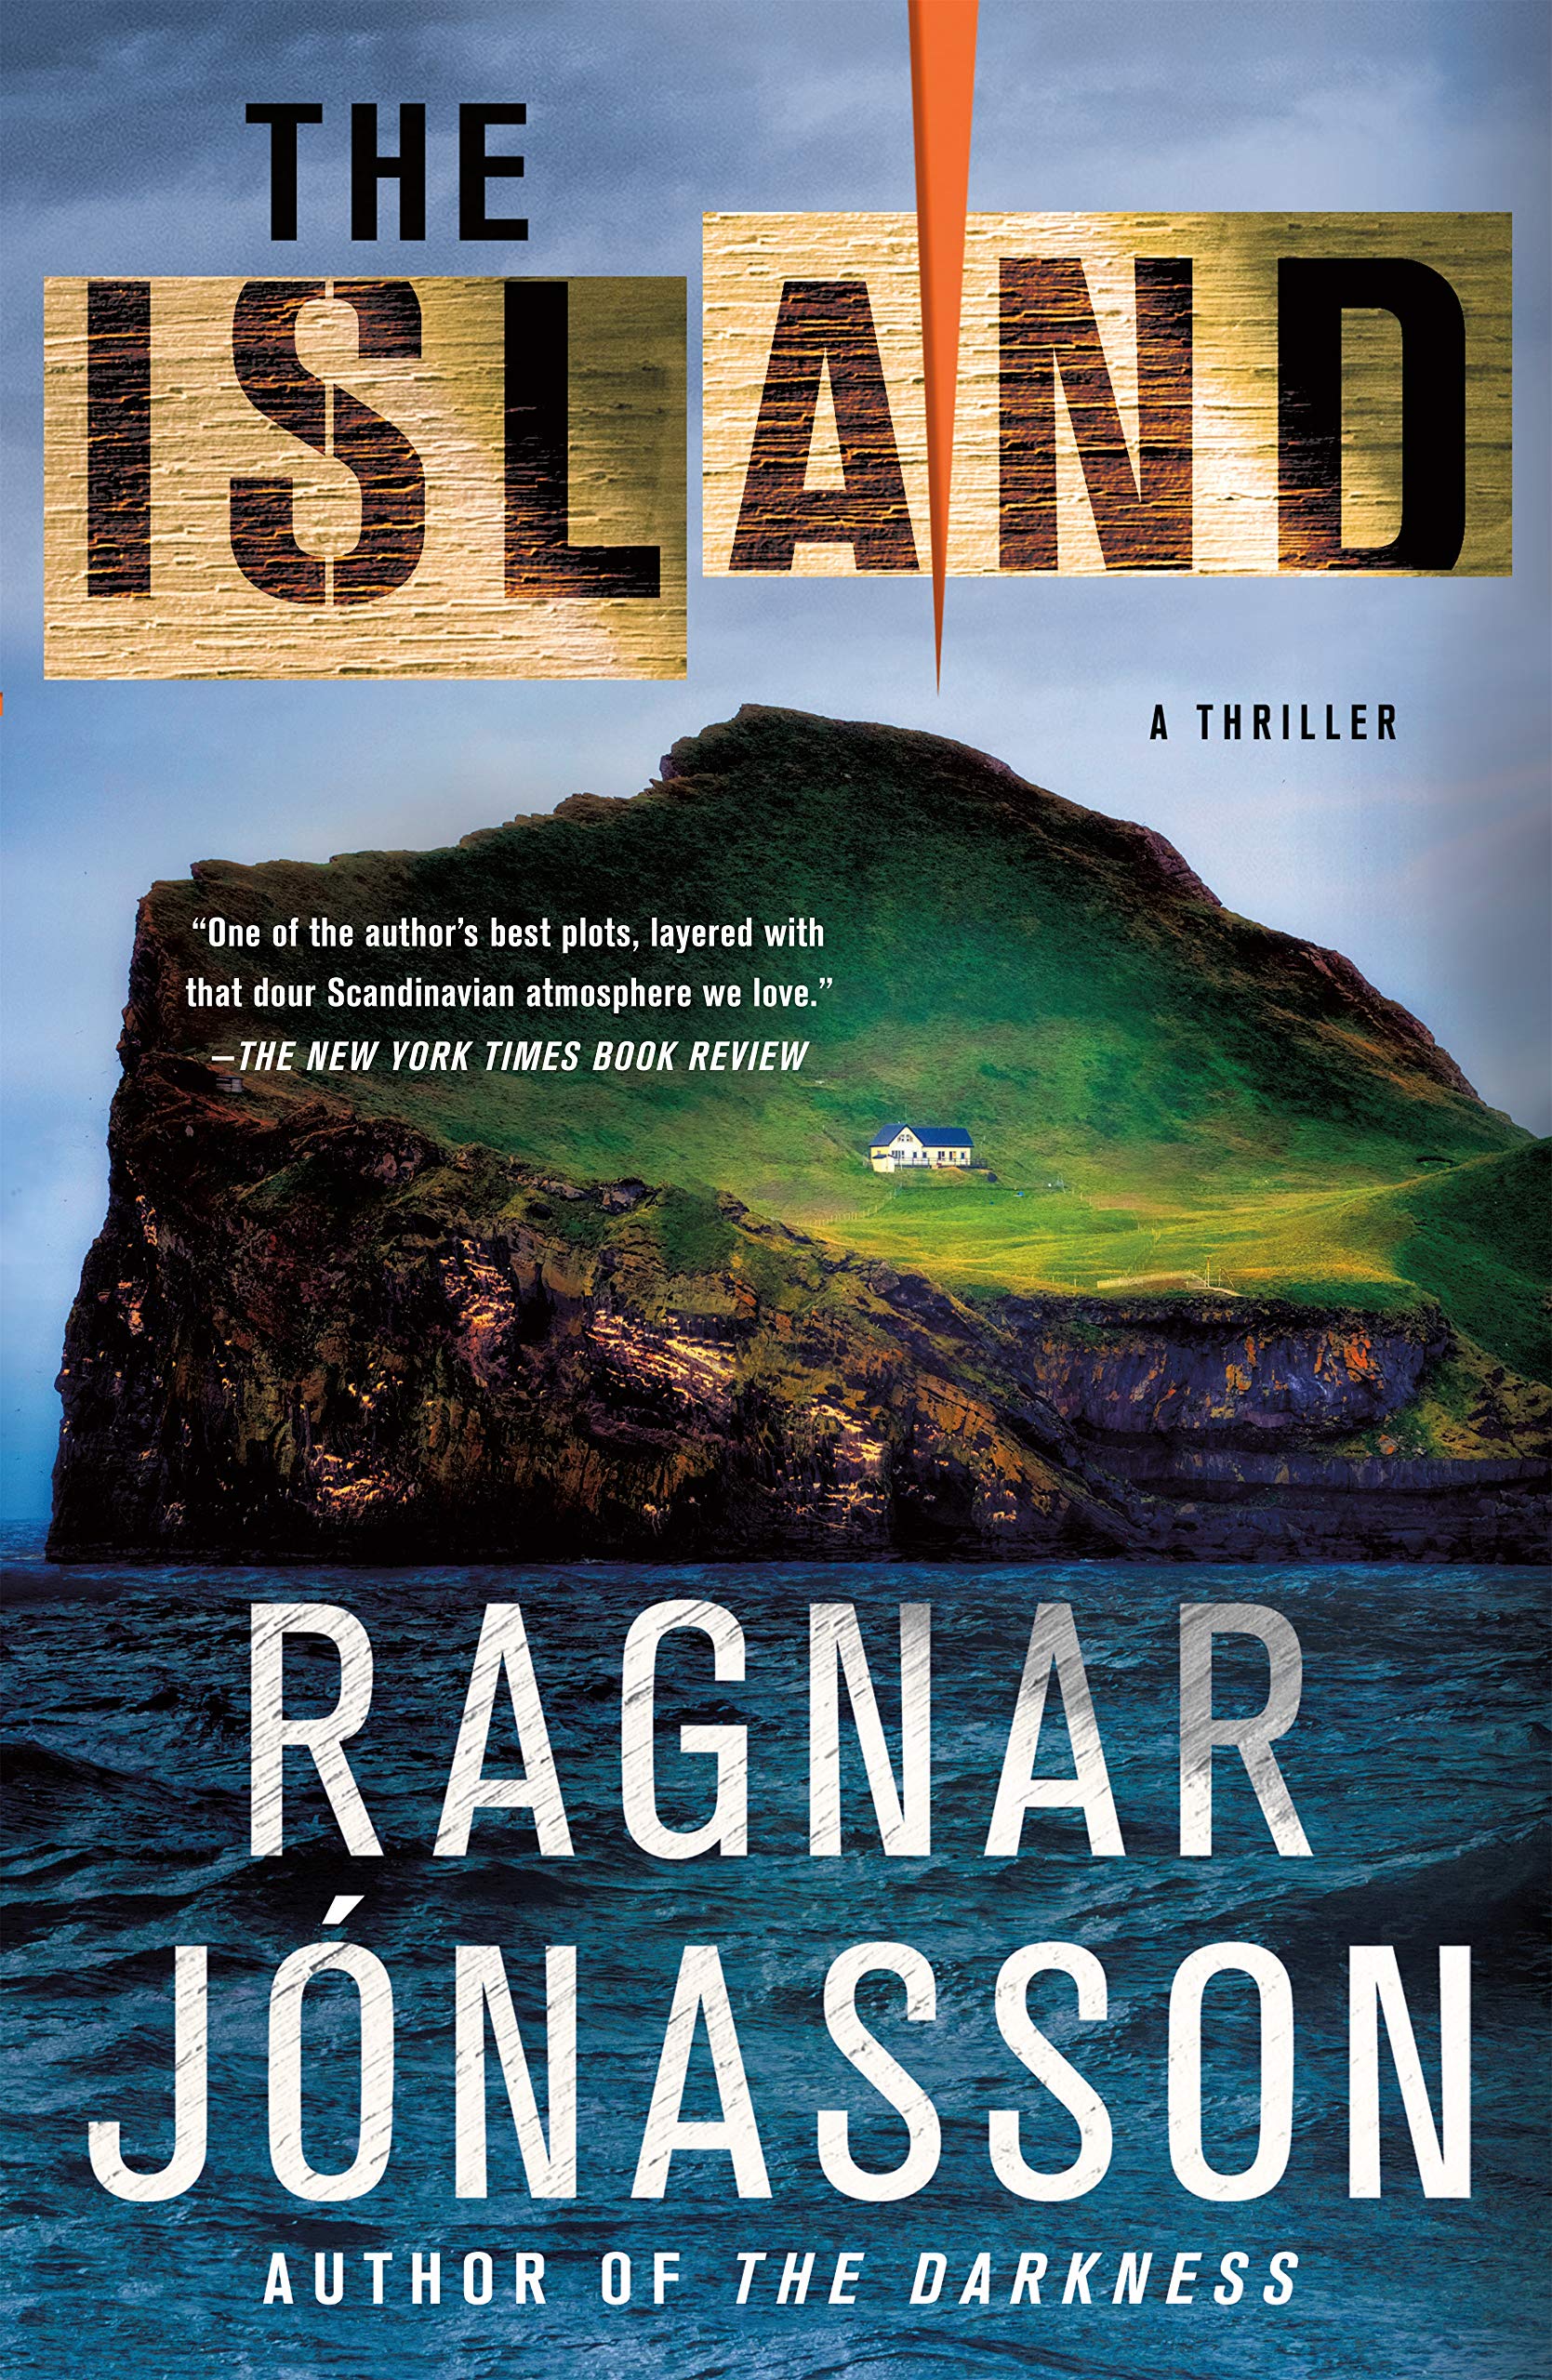 The Island: A Thriller